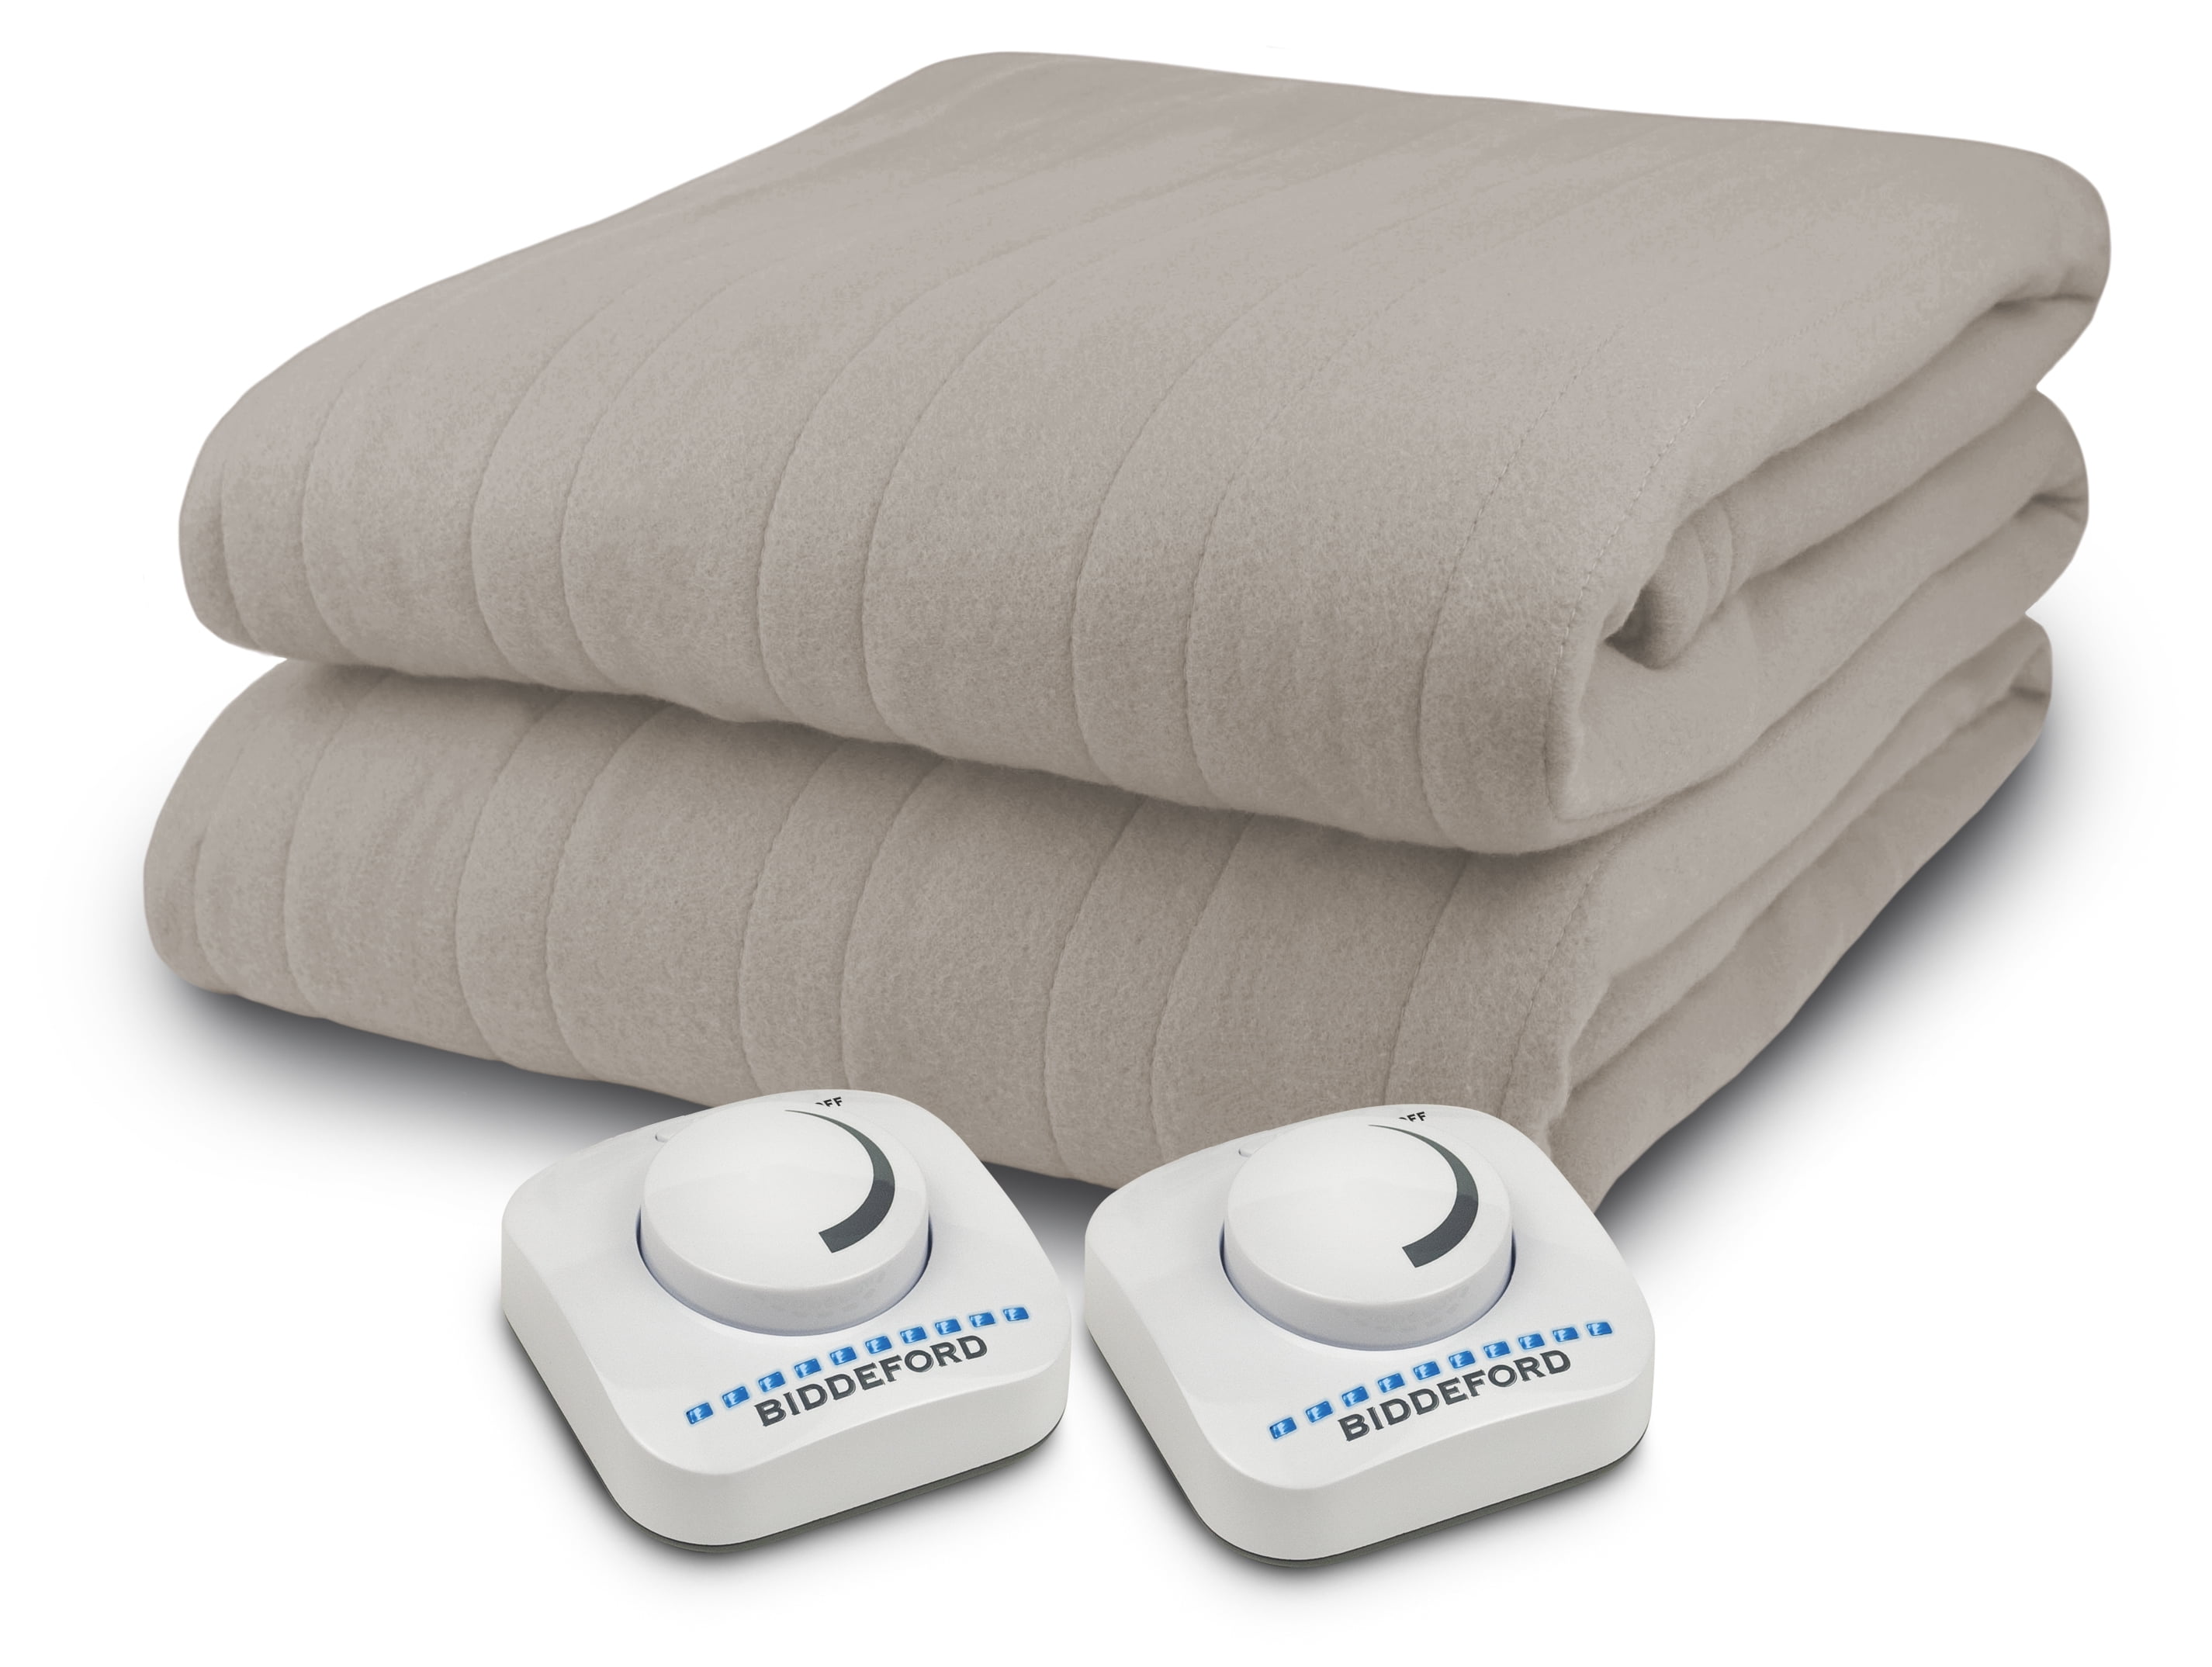 Heated Electric Blanket, Biddeford, Bedding, Full, Tan 